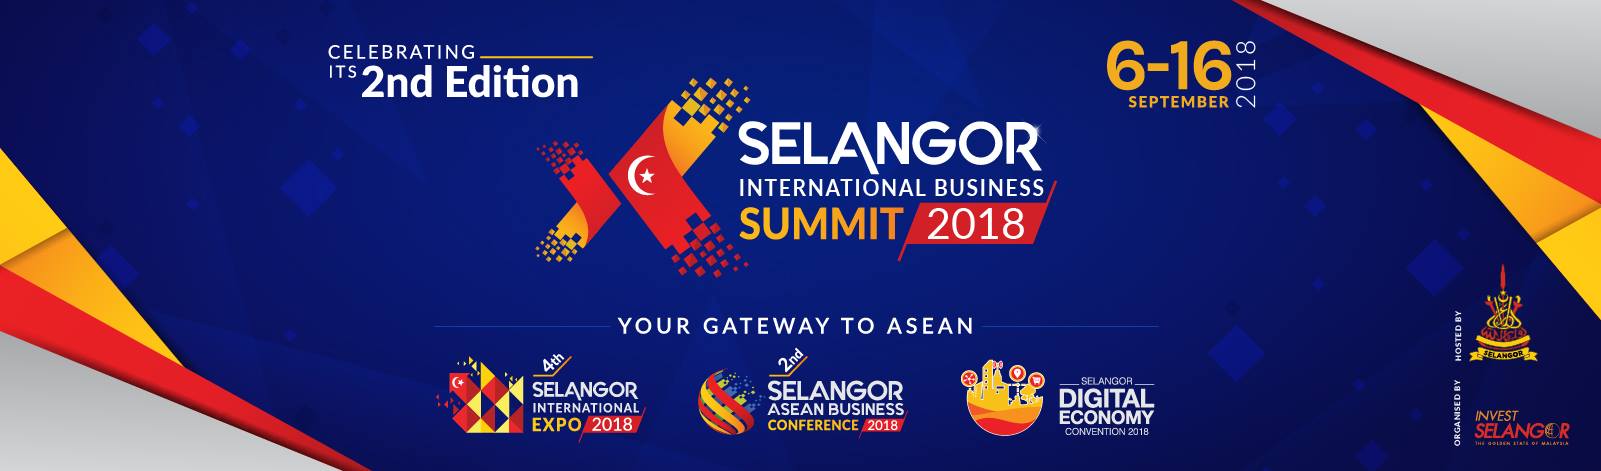 selangor international business summit